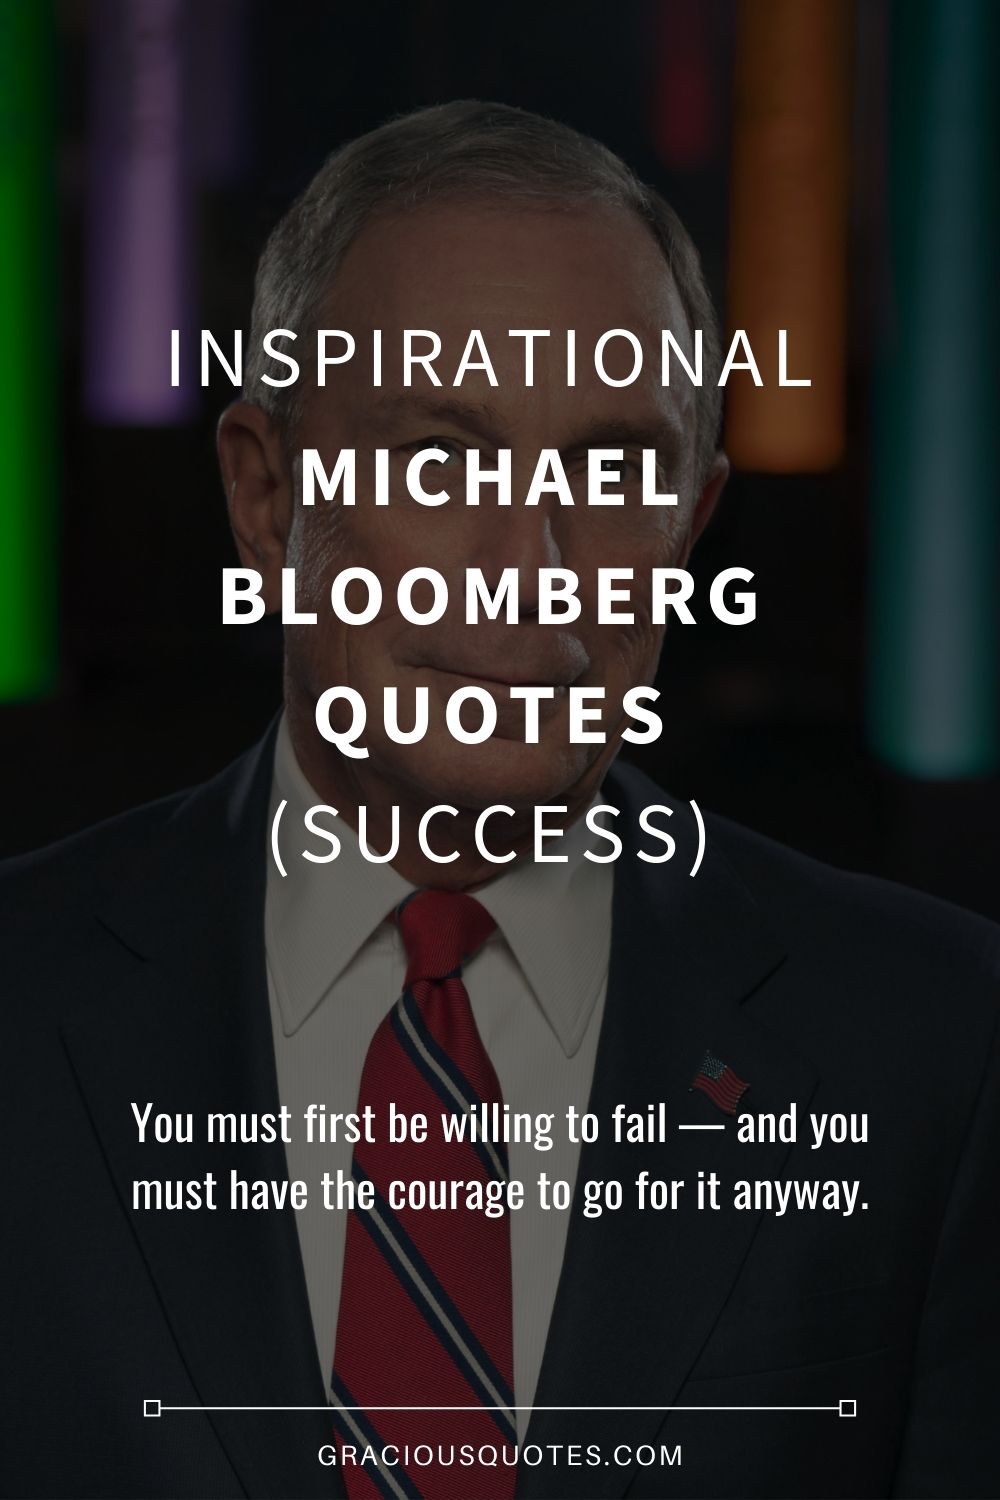 Inspirational Michael Bloomberg Quotes (SUCCESS) - Gracious Quotes